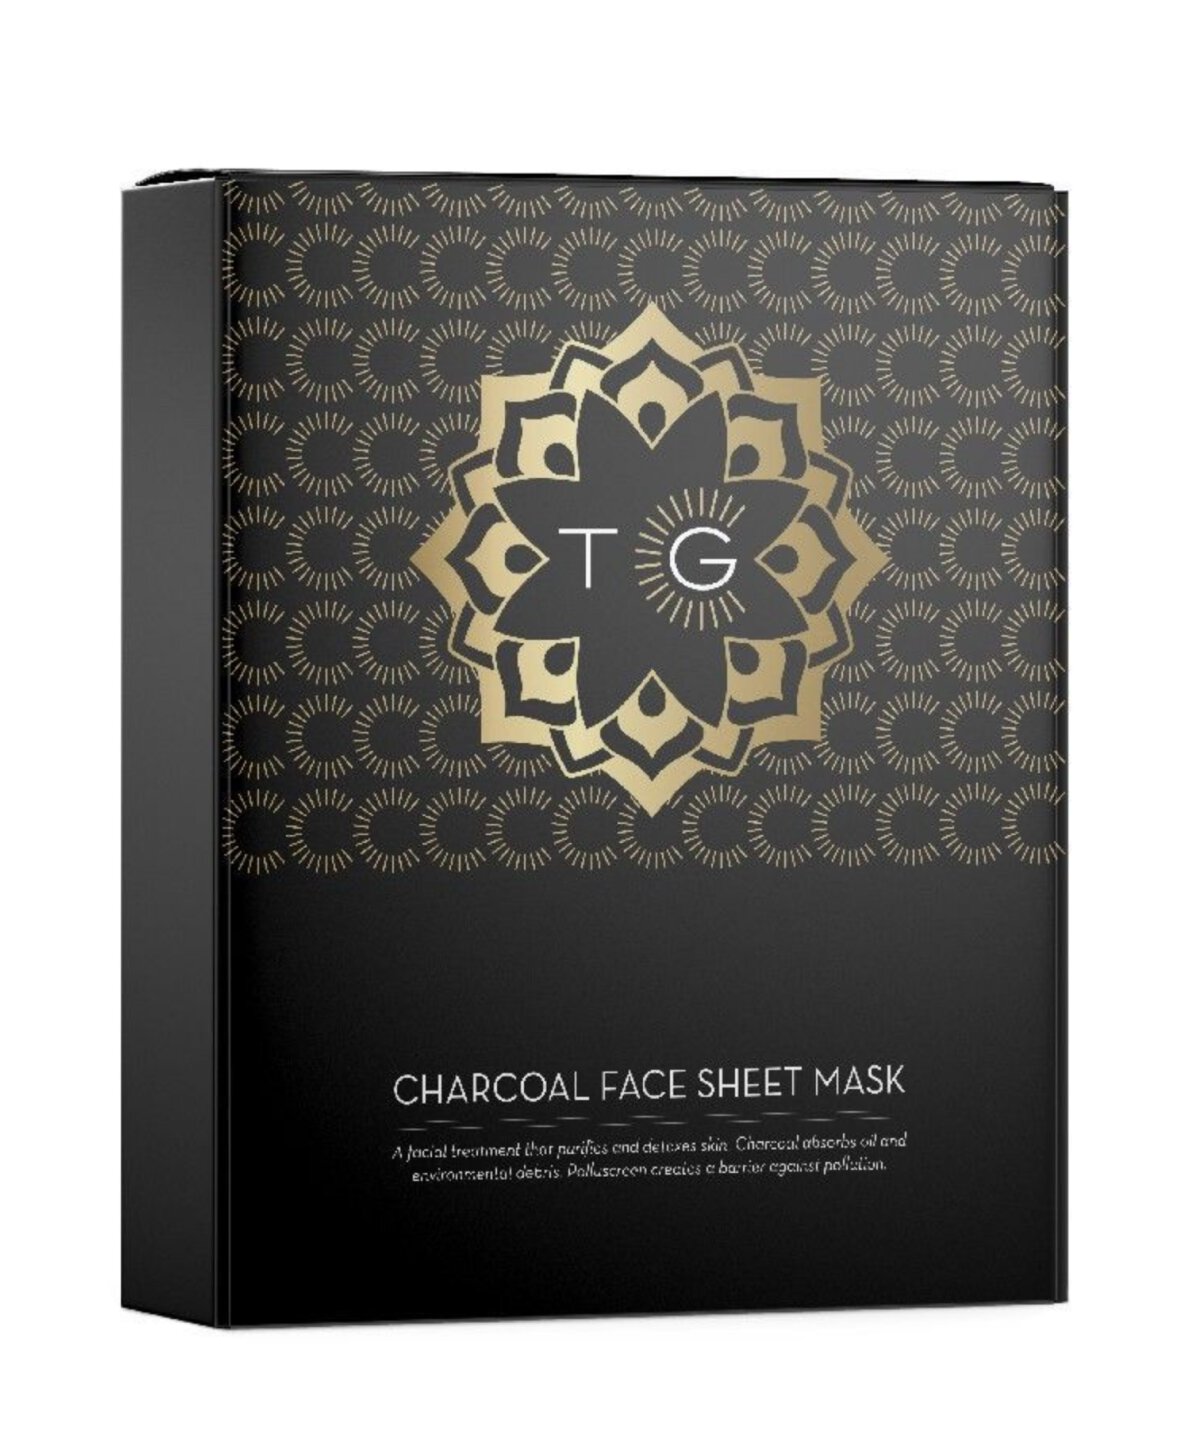 Total Glow charcoal face sheet mask